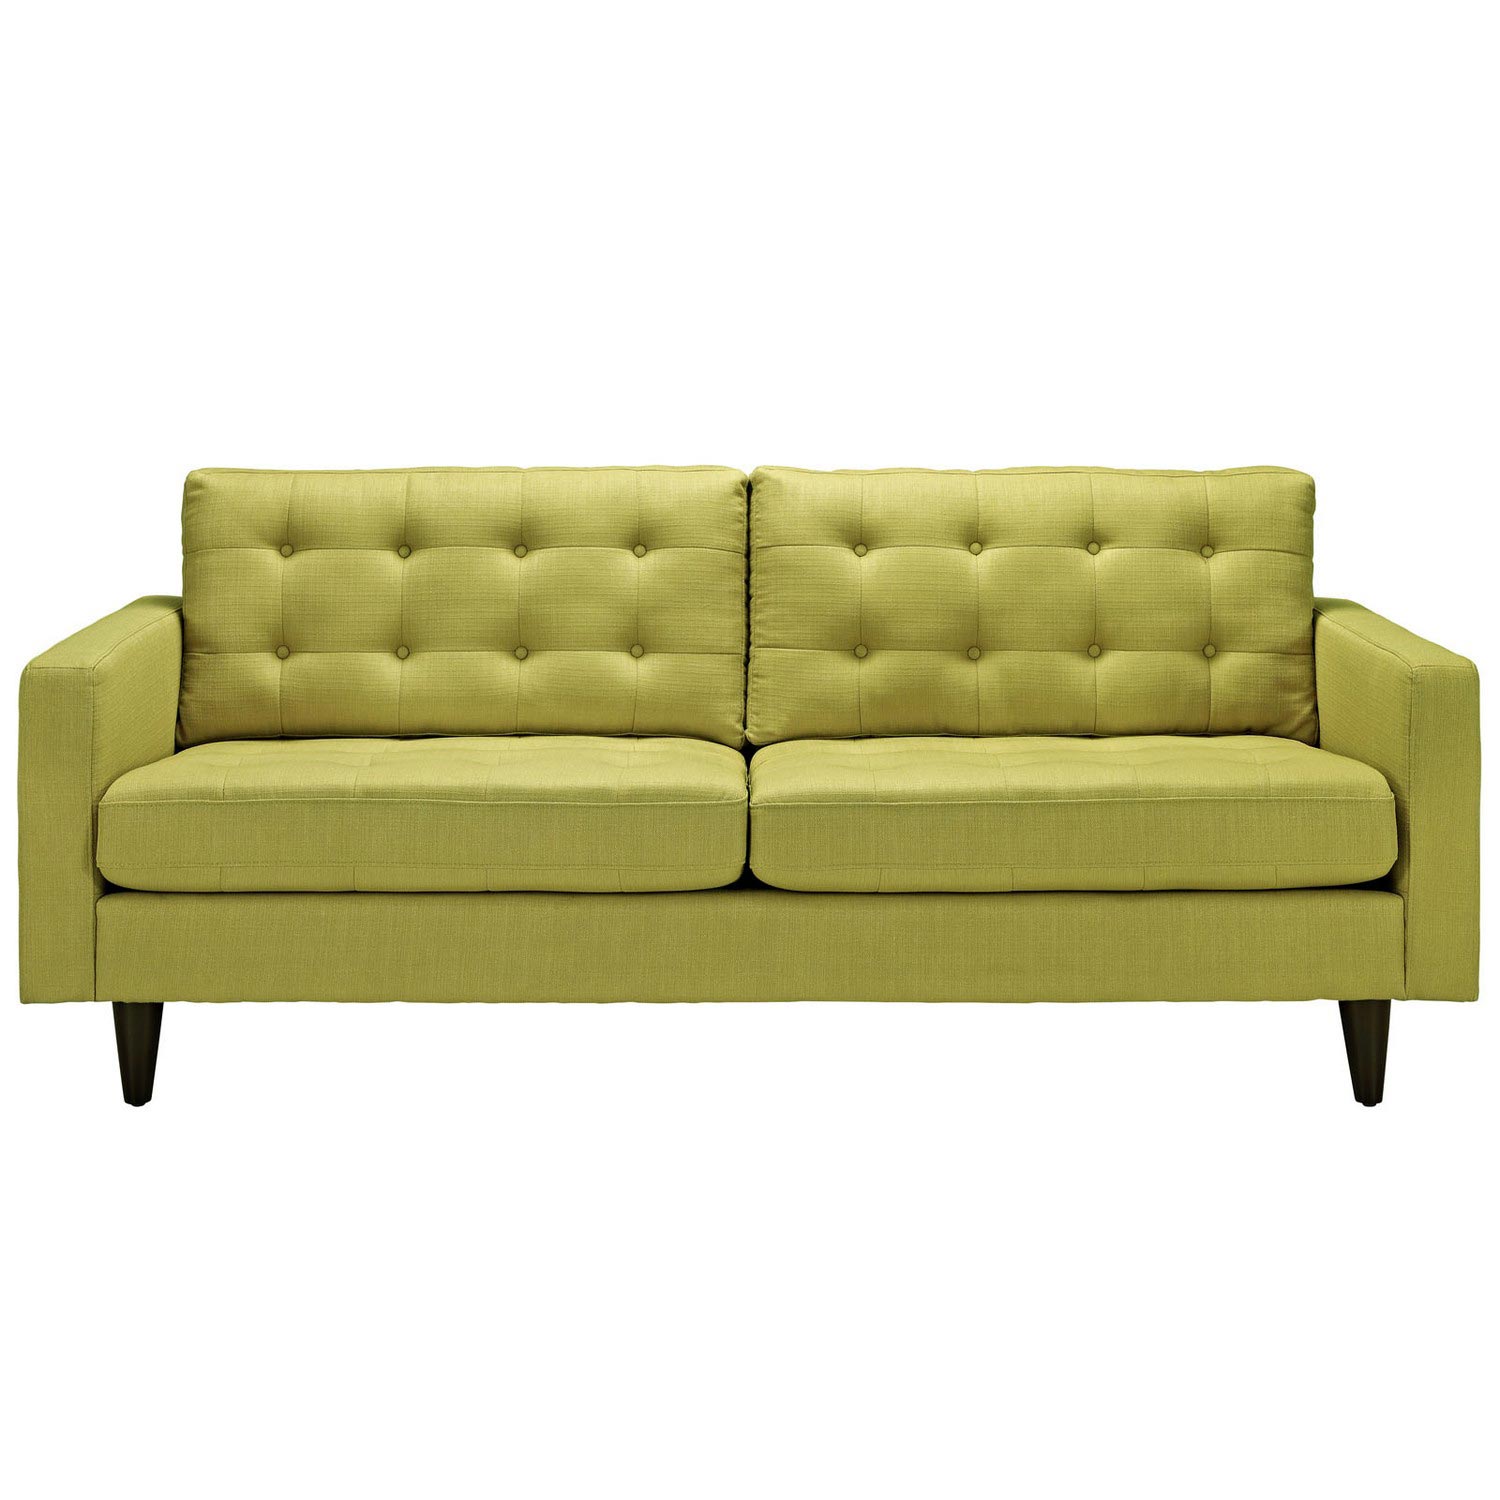 Modway Empress Upholstered Sofa - Wheatgrass